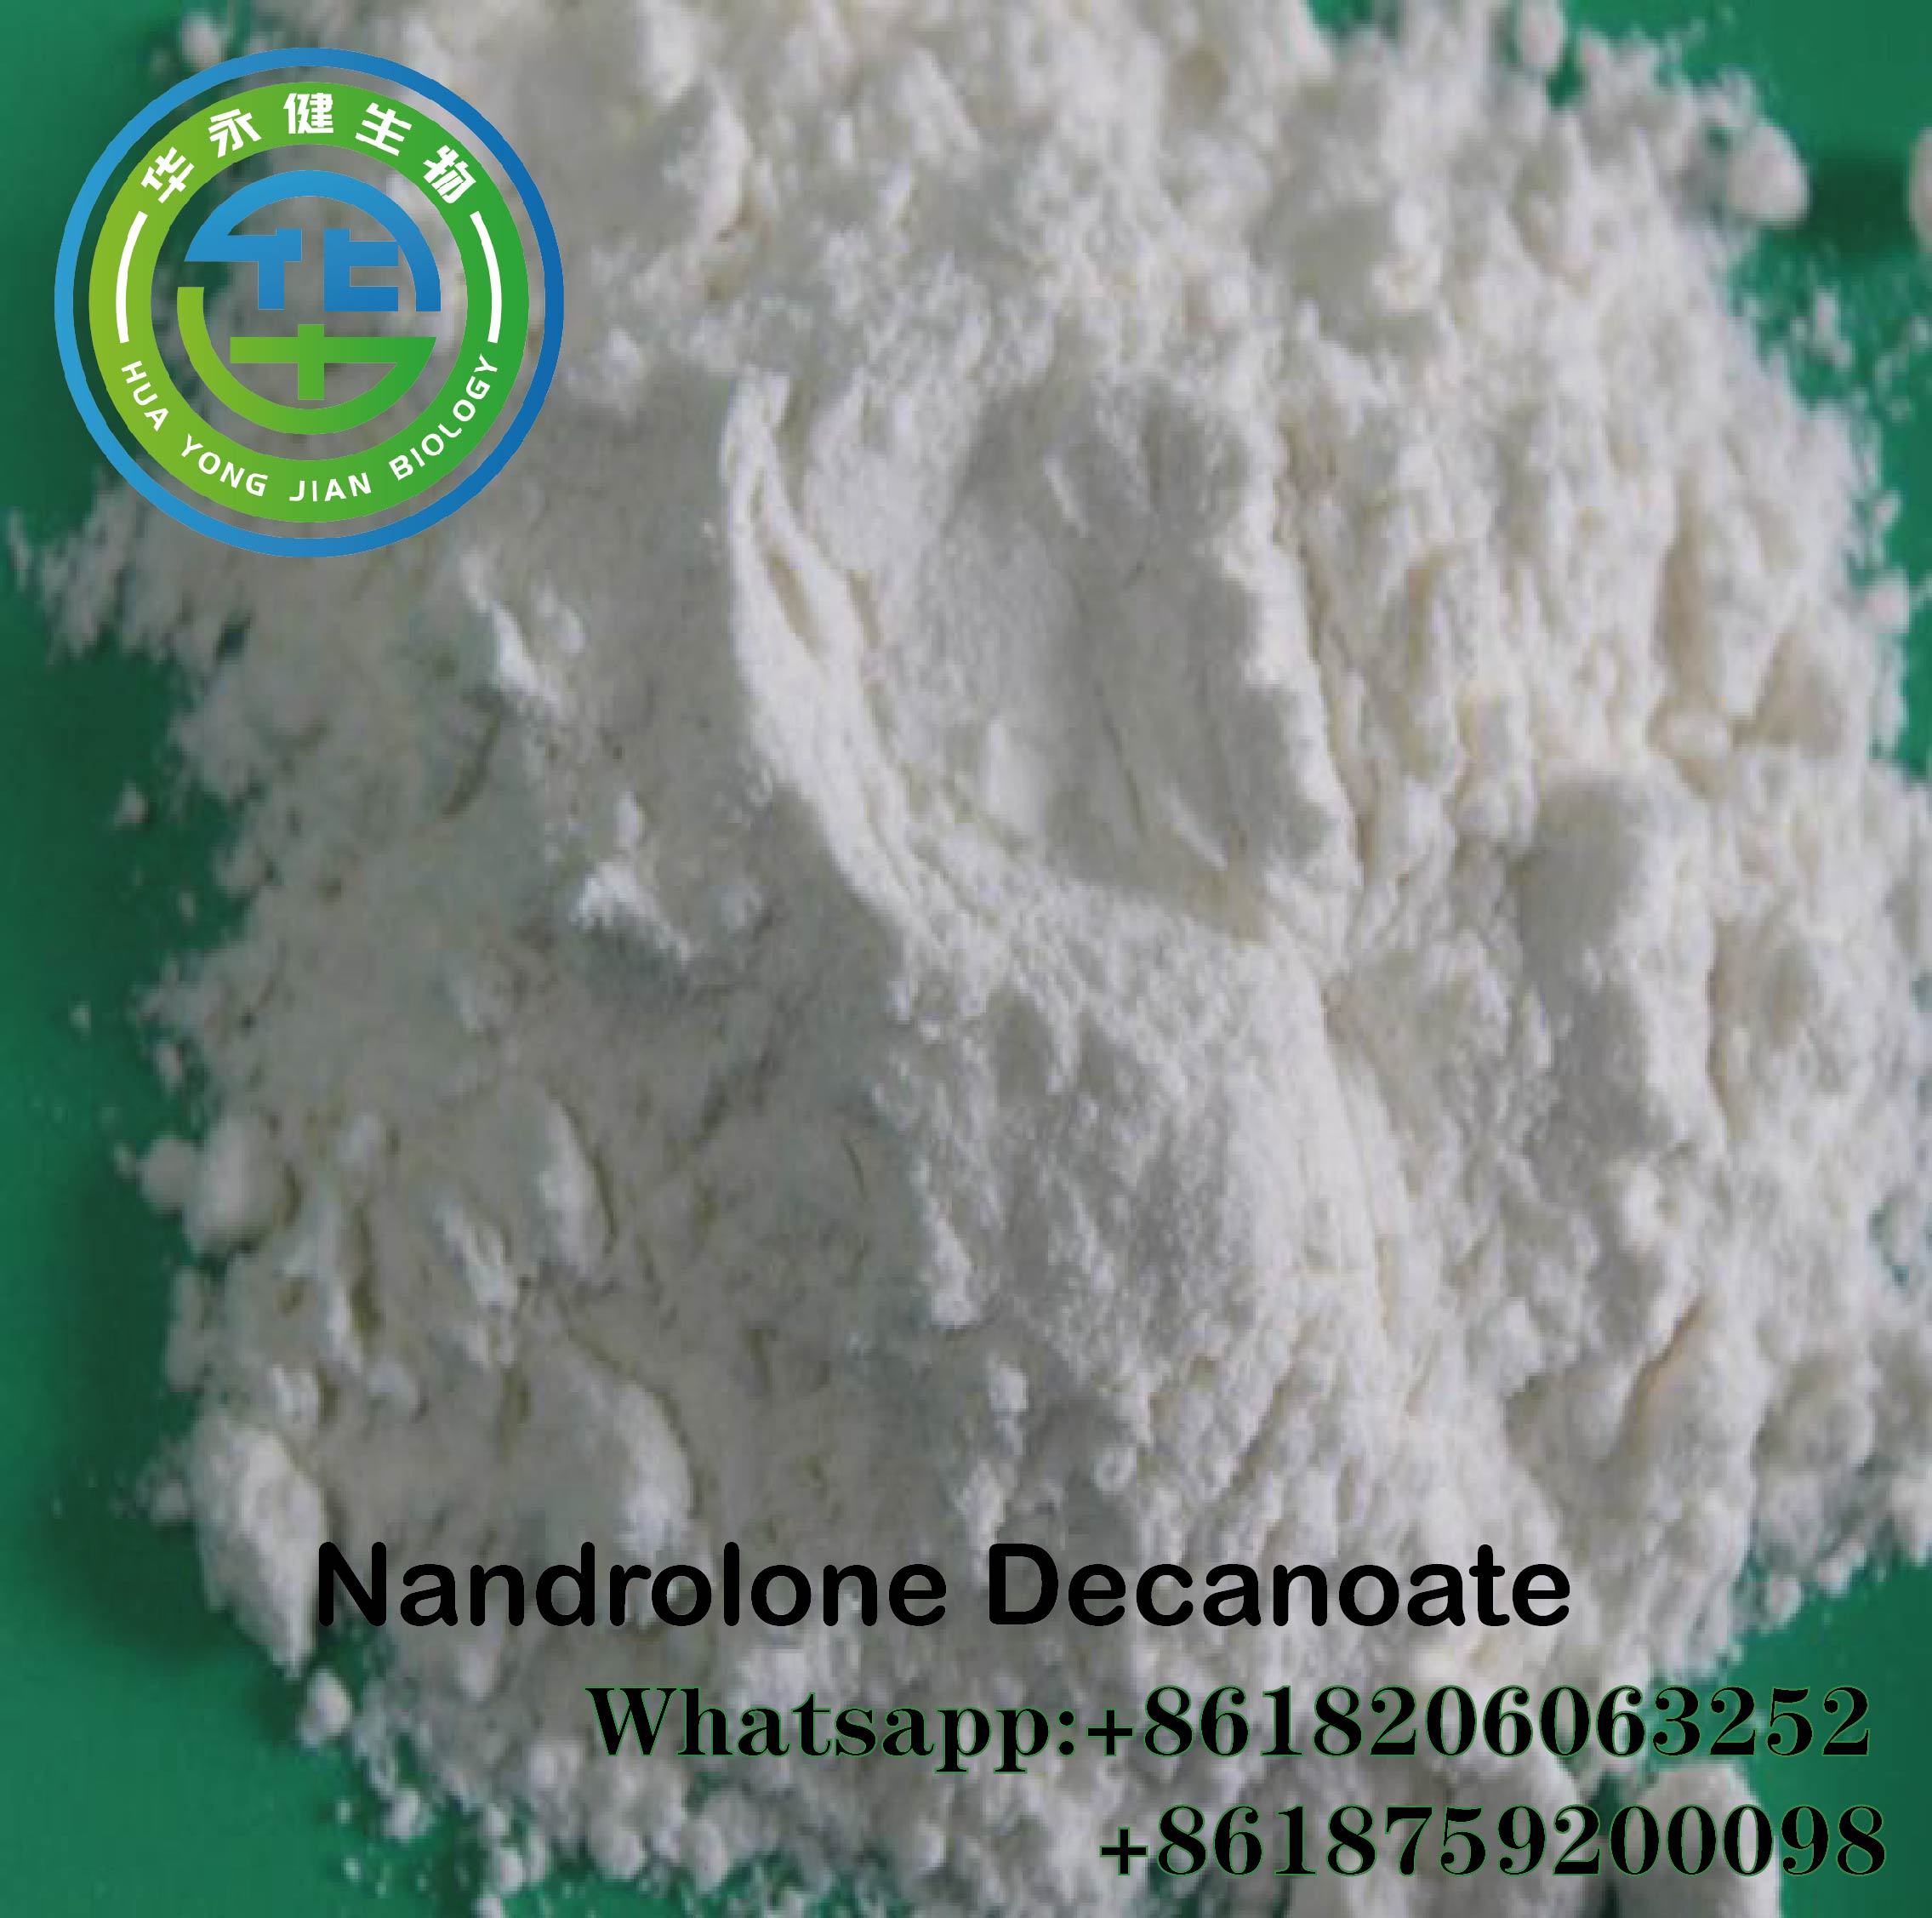 Darobolin Deca CasNO.360-70-3/DECA vefaukandi sterar Nandrolone Decanoate Powder Valin mynd